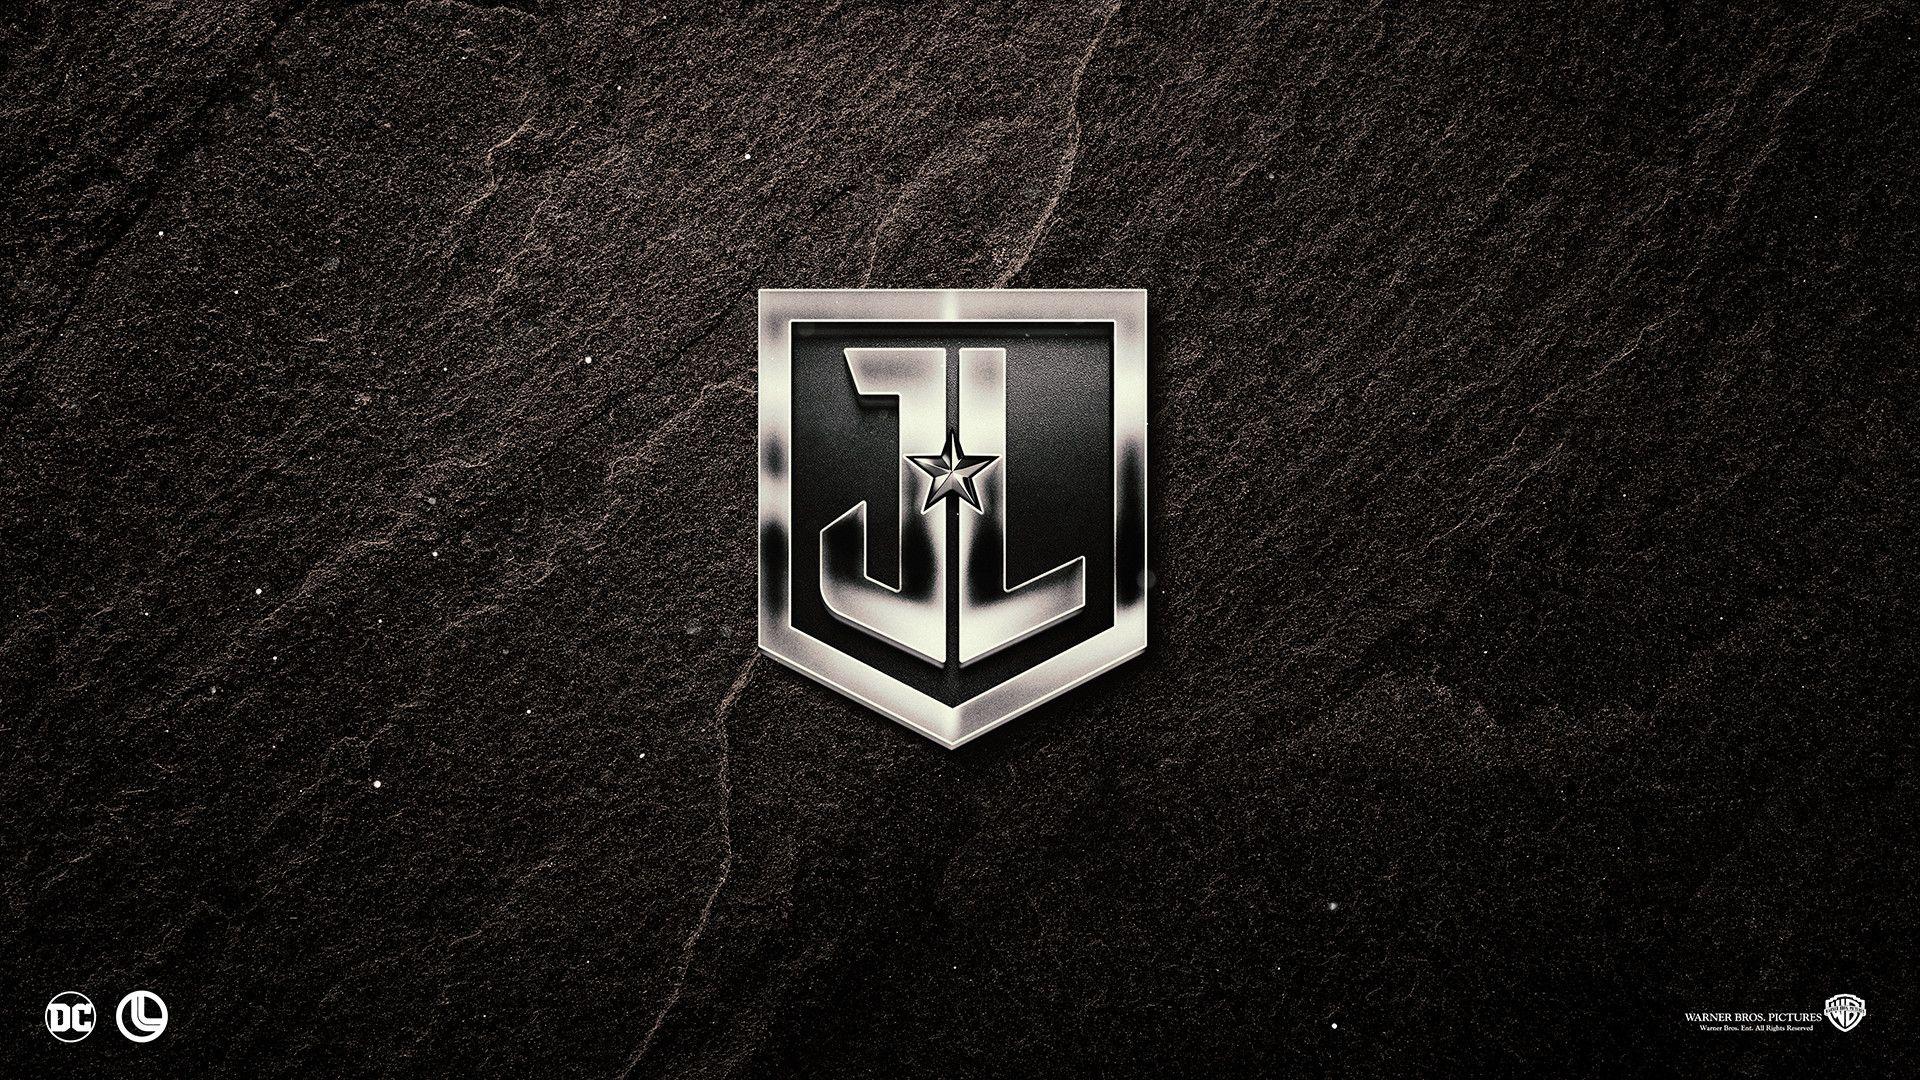 Logo Justice League Wallpapers Hd Wallpaper Cave